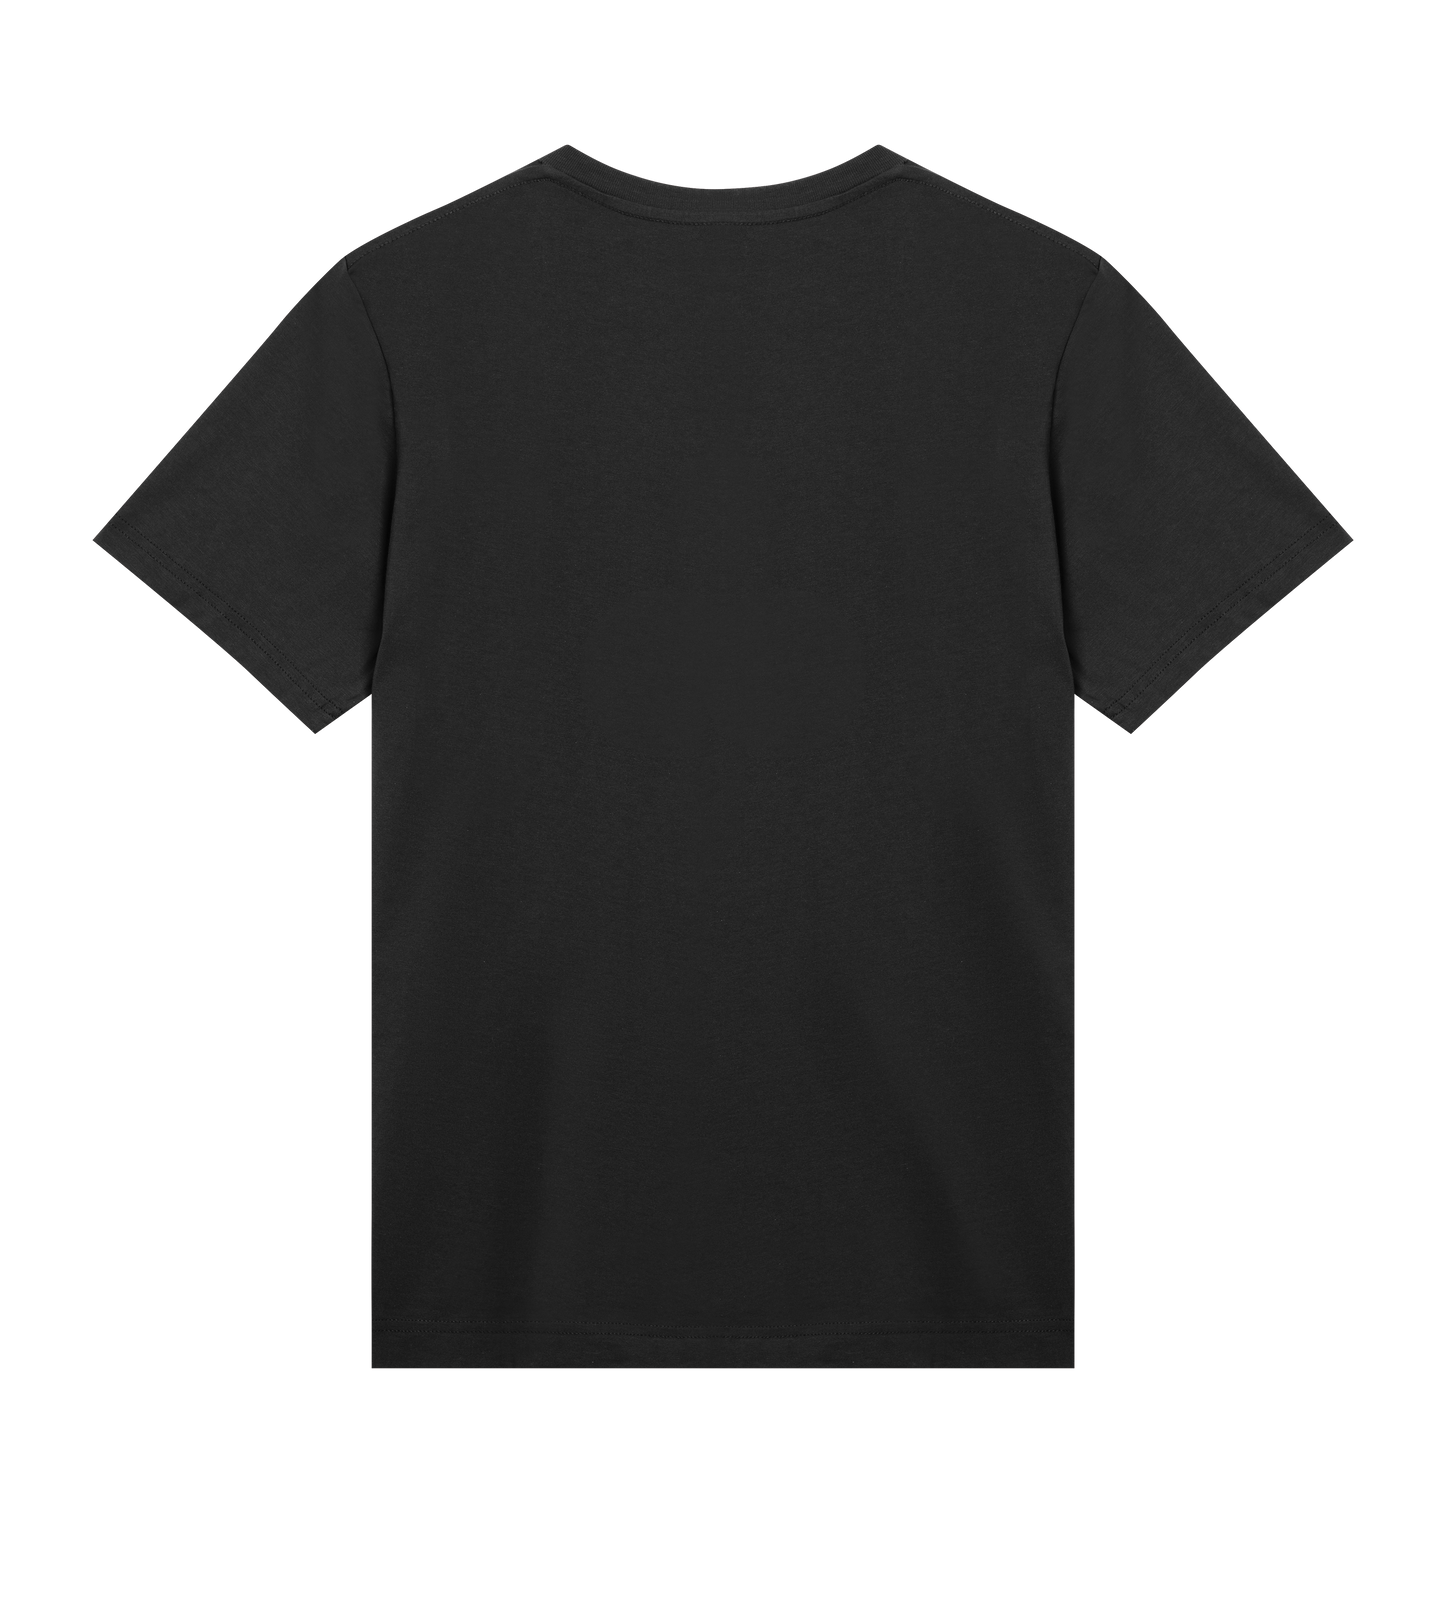 MLS Recordings T-shirt Black/White